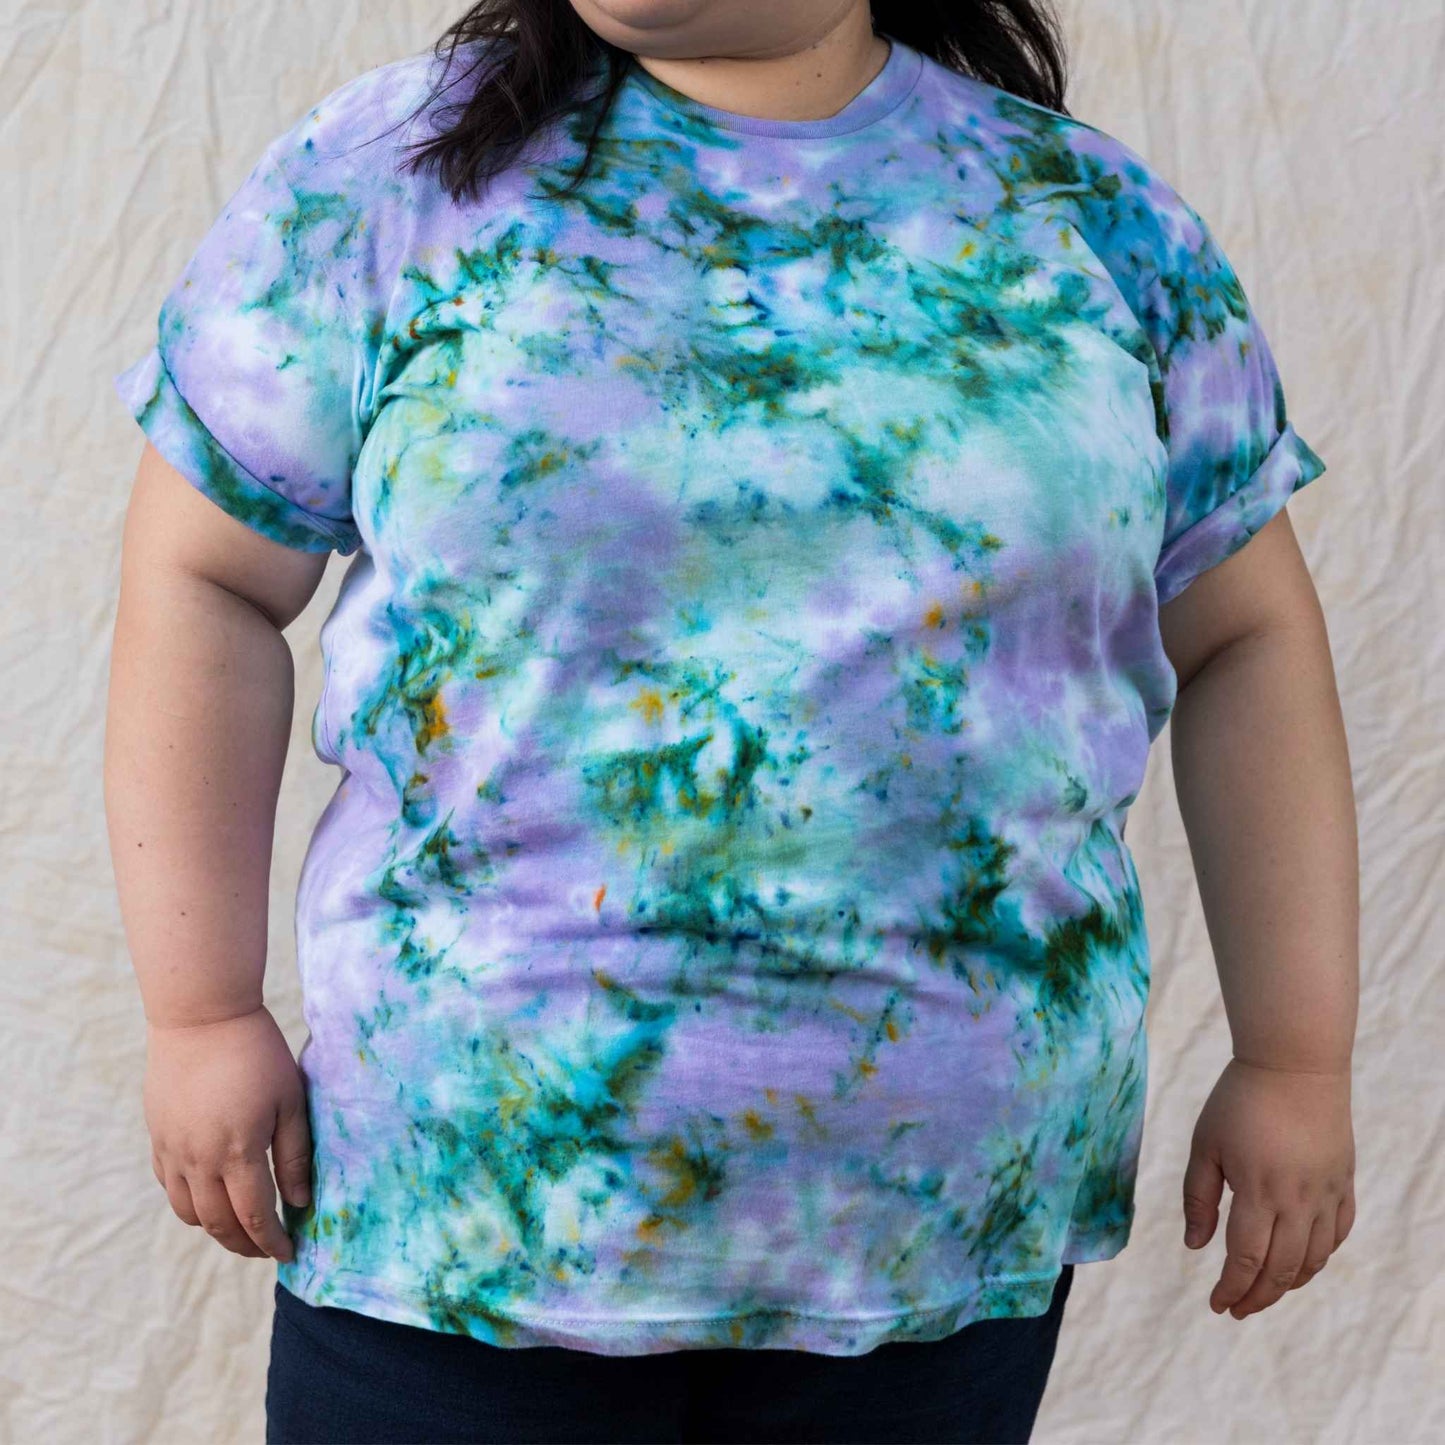 Seafoam aquamarine plus size tie dye shirt cotton unisex in watercolor pattern